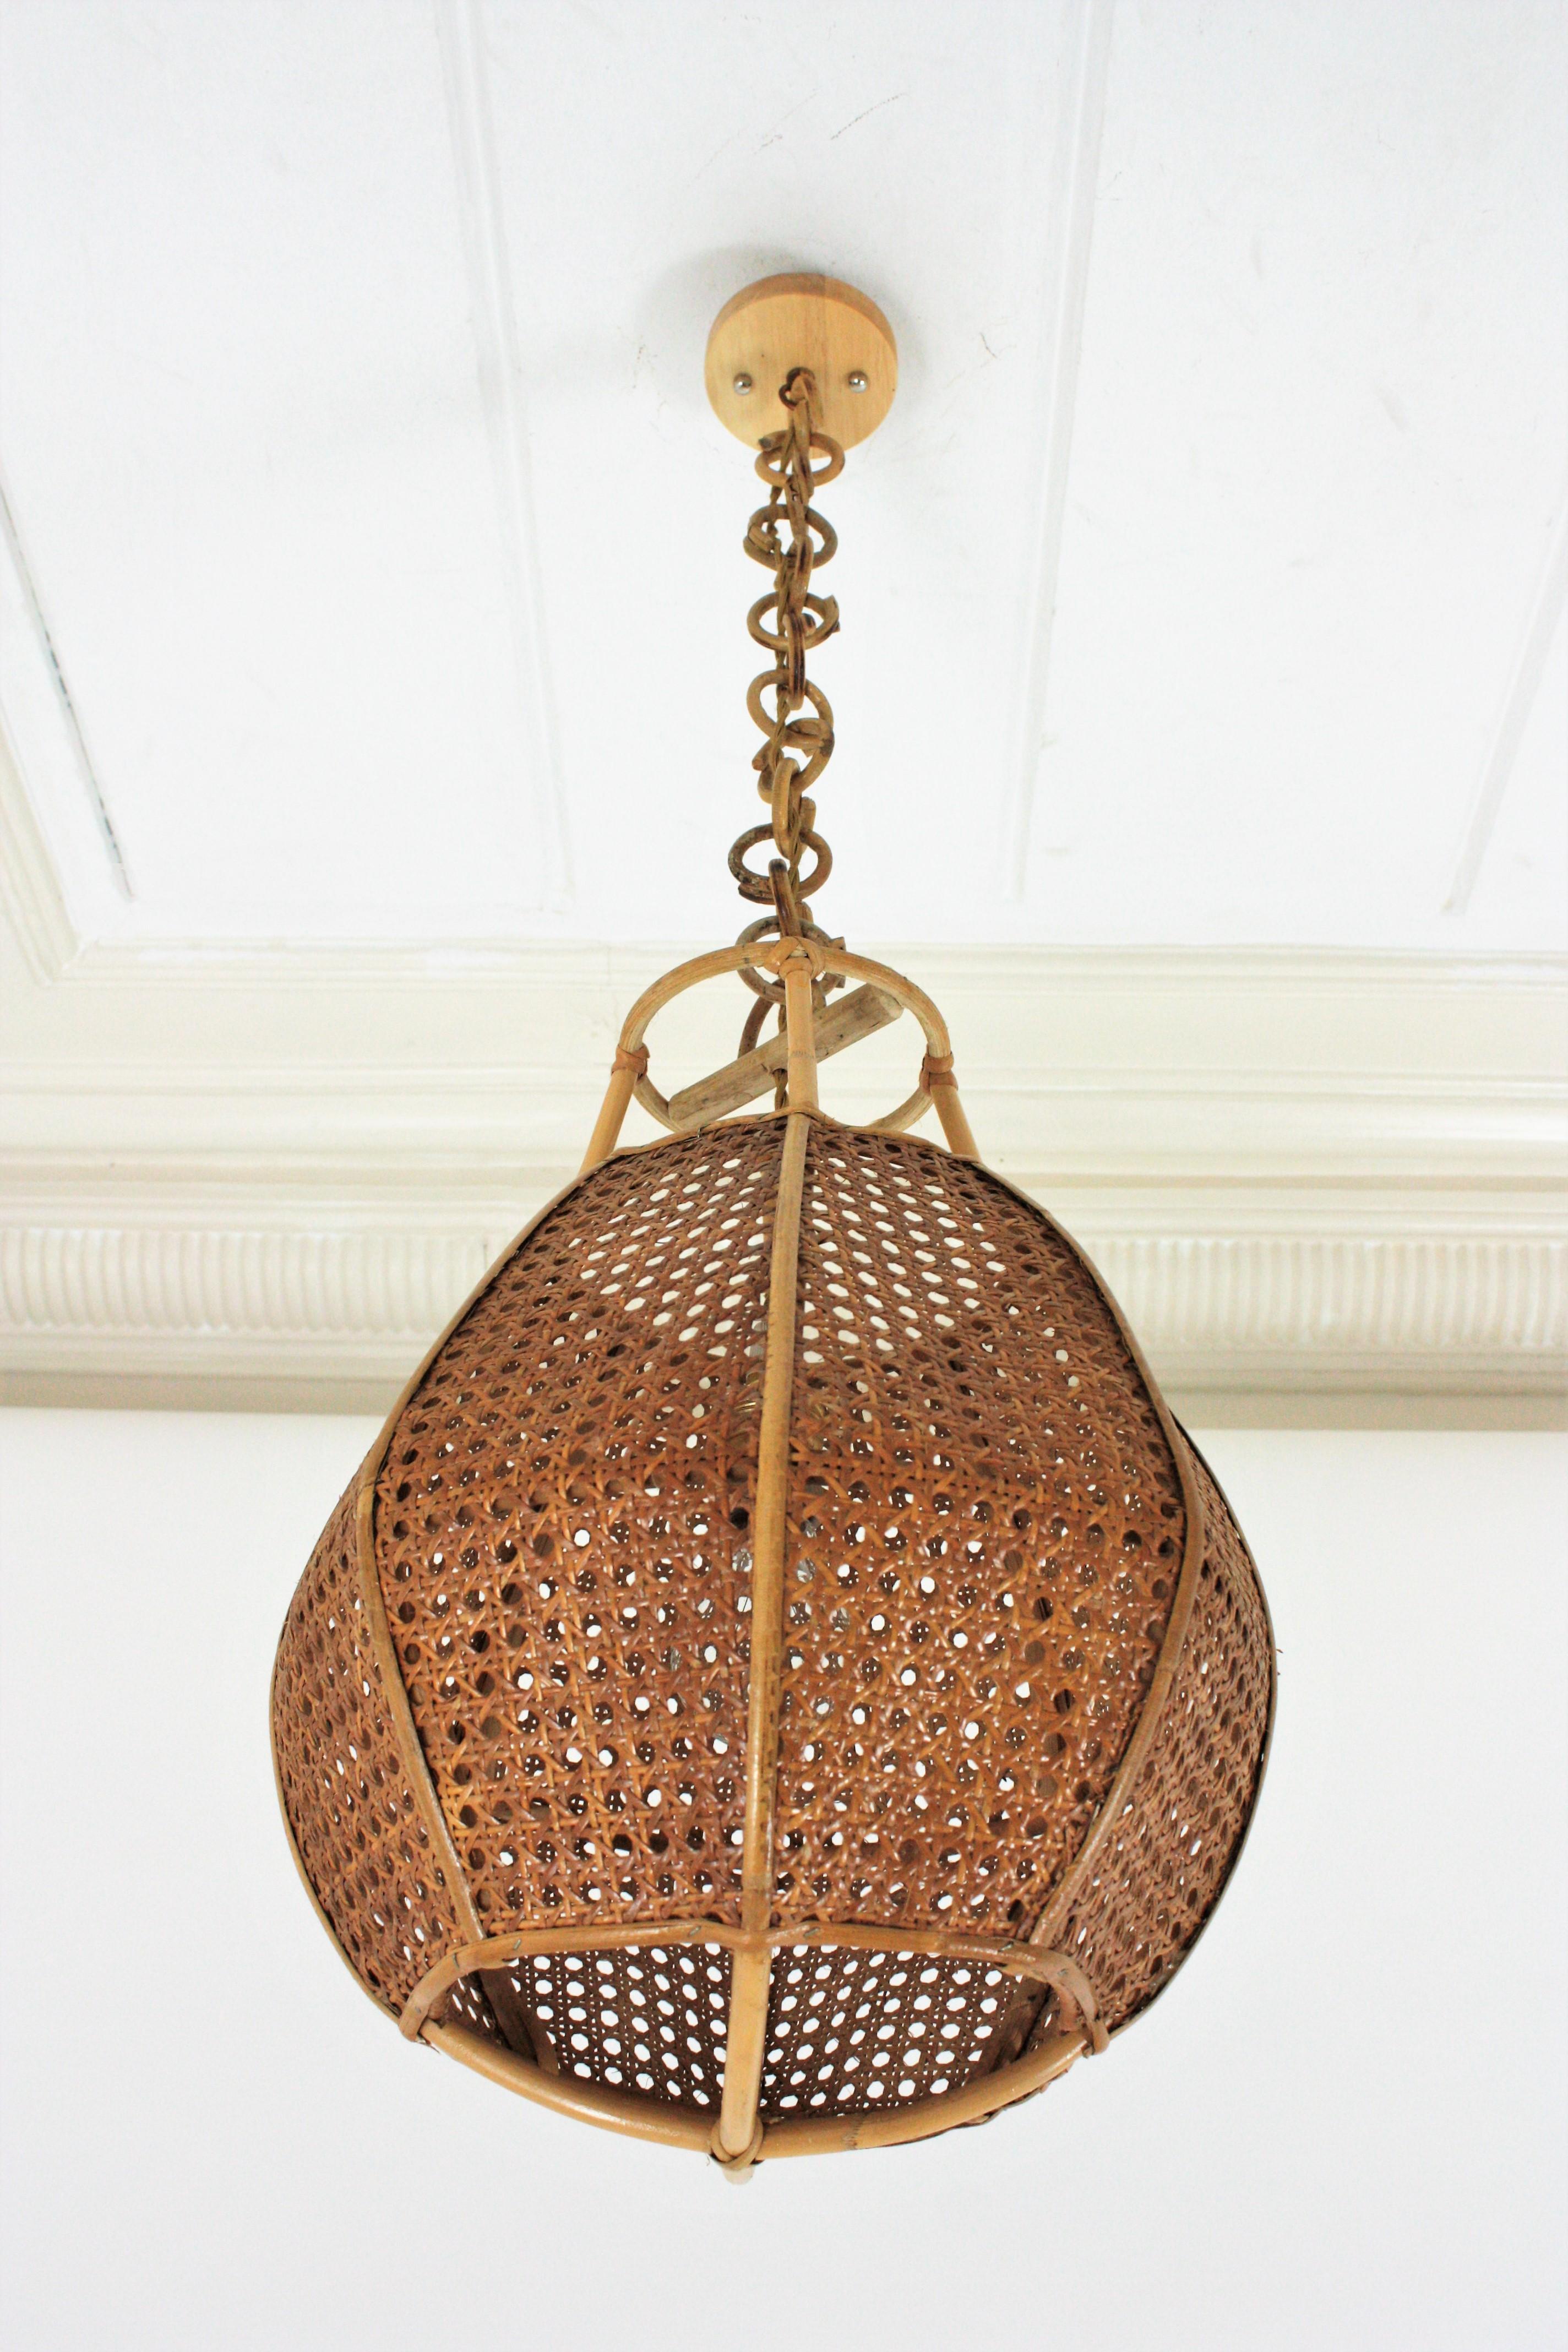 20th Century Italian Modernist Wicker Wire Rattan Globe Pendant Hanging Light